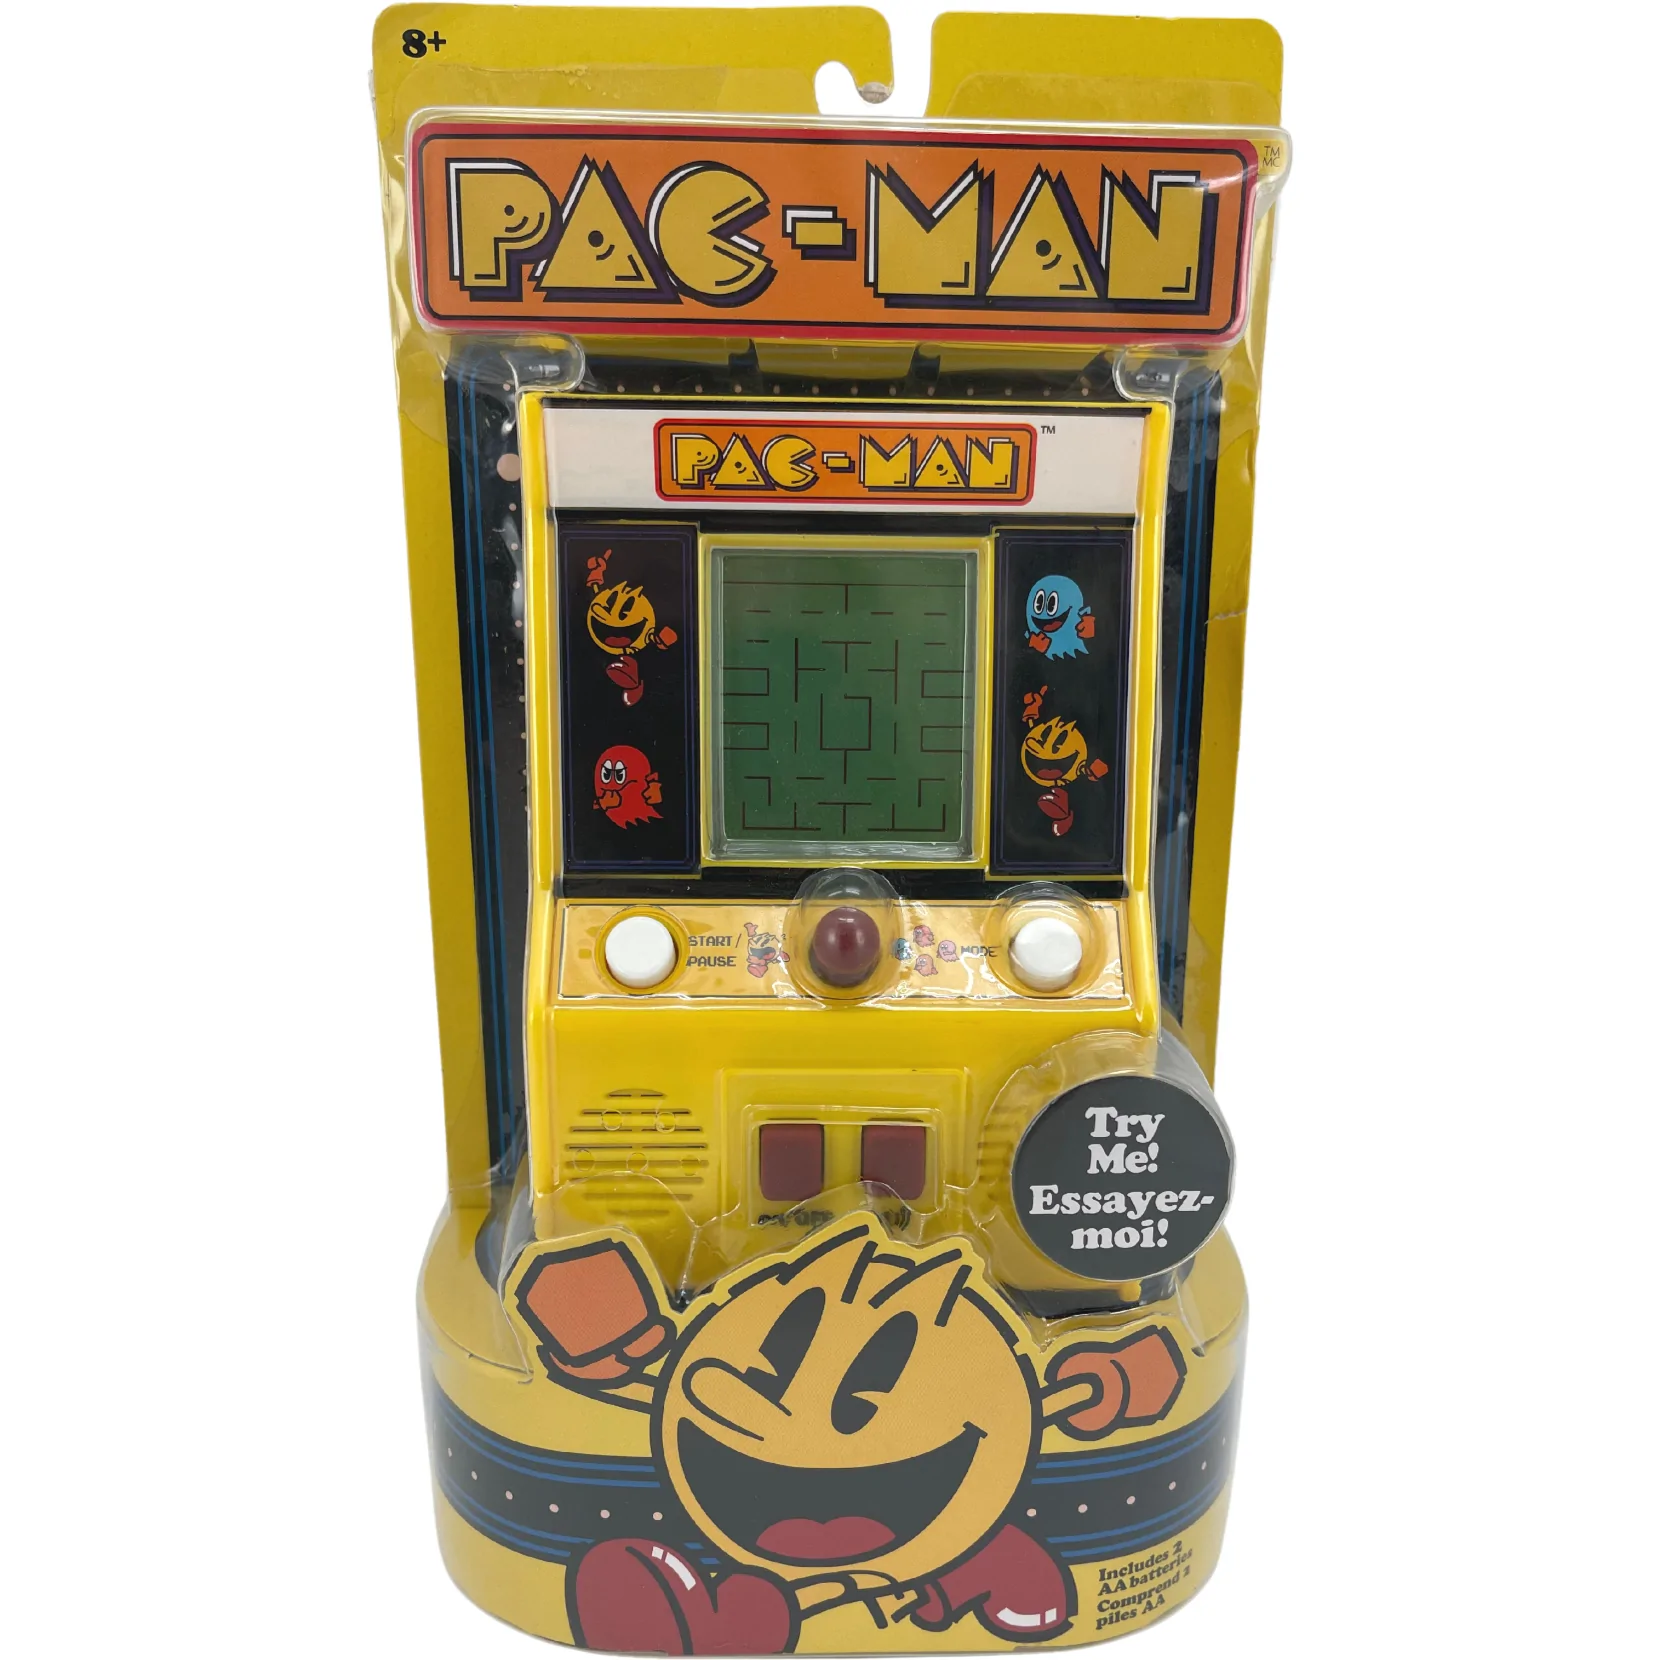 Basic Fun Pac-Man Arcade Game / Classic Arcade Gameplay / 2 Play Modes